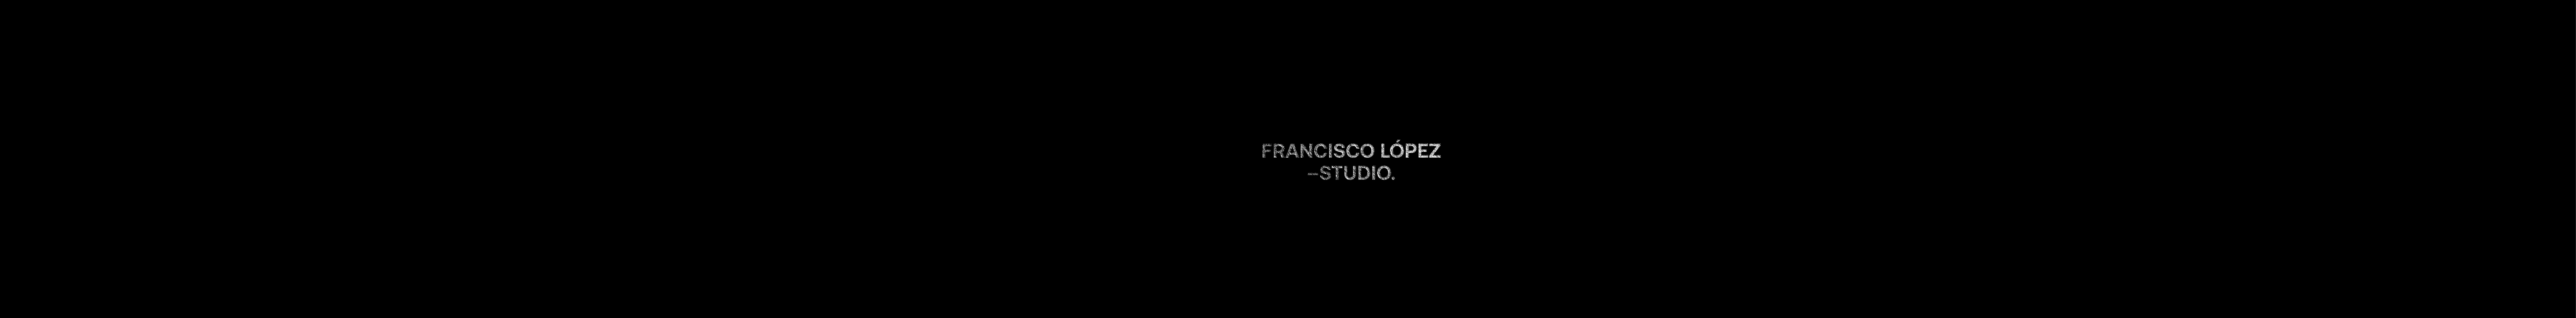 Banner de perfil de FRANCISCO LOPEZ